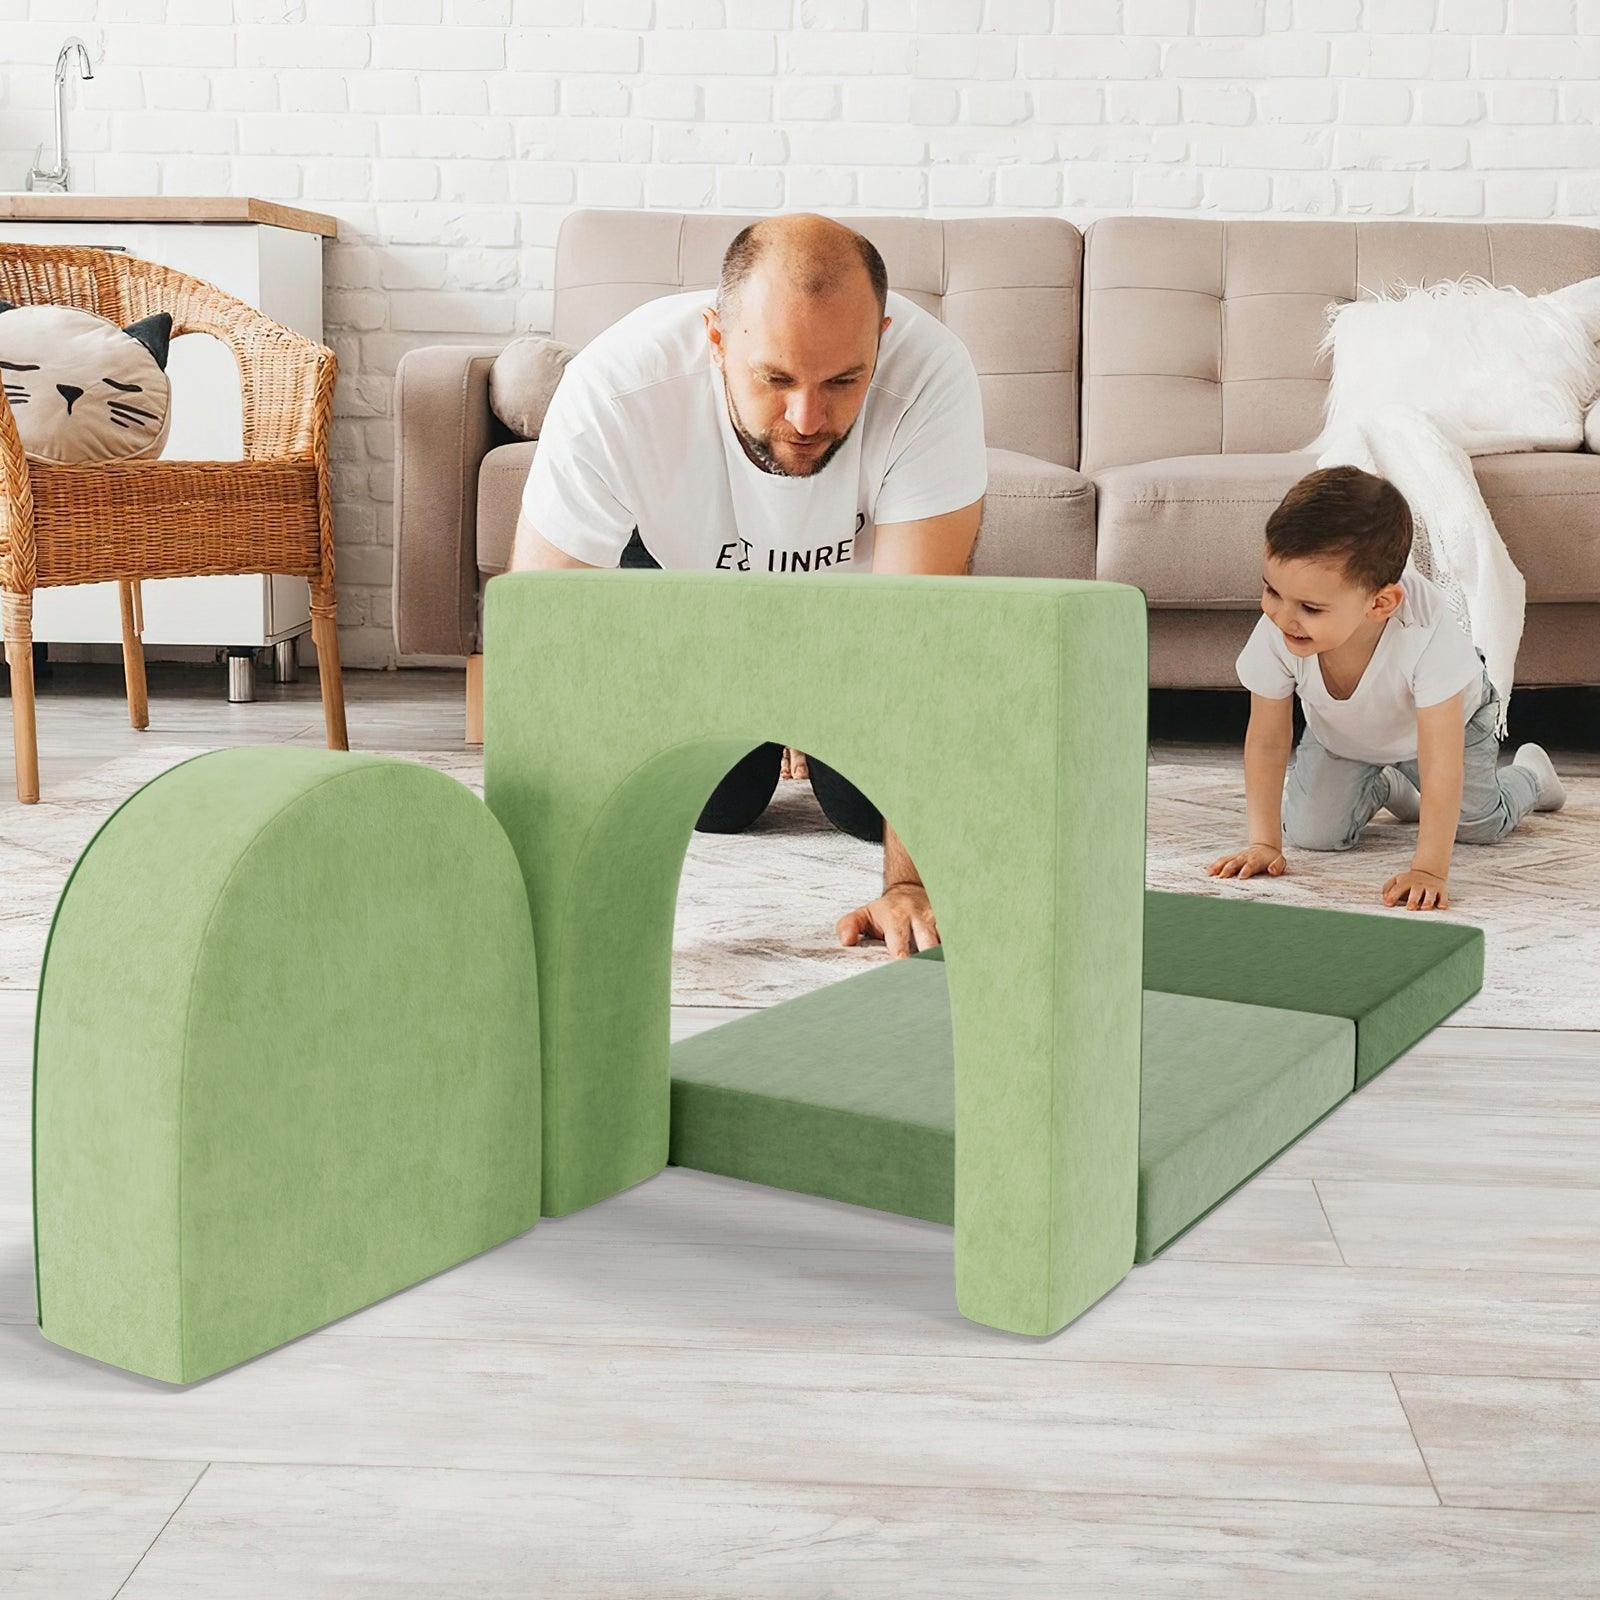 RaDEWAY 3 PCs U-shaped Kids Crawling Sofa Play Couch Set